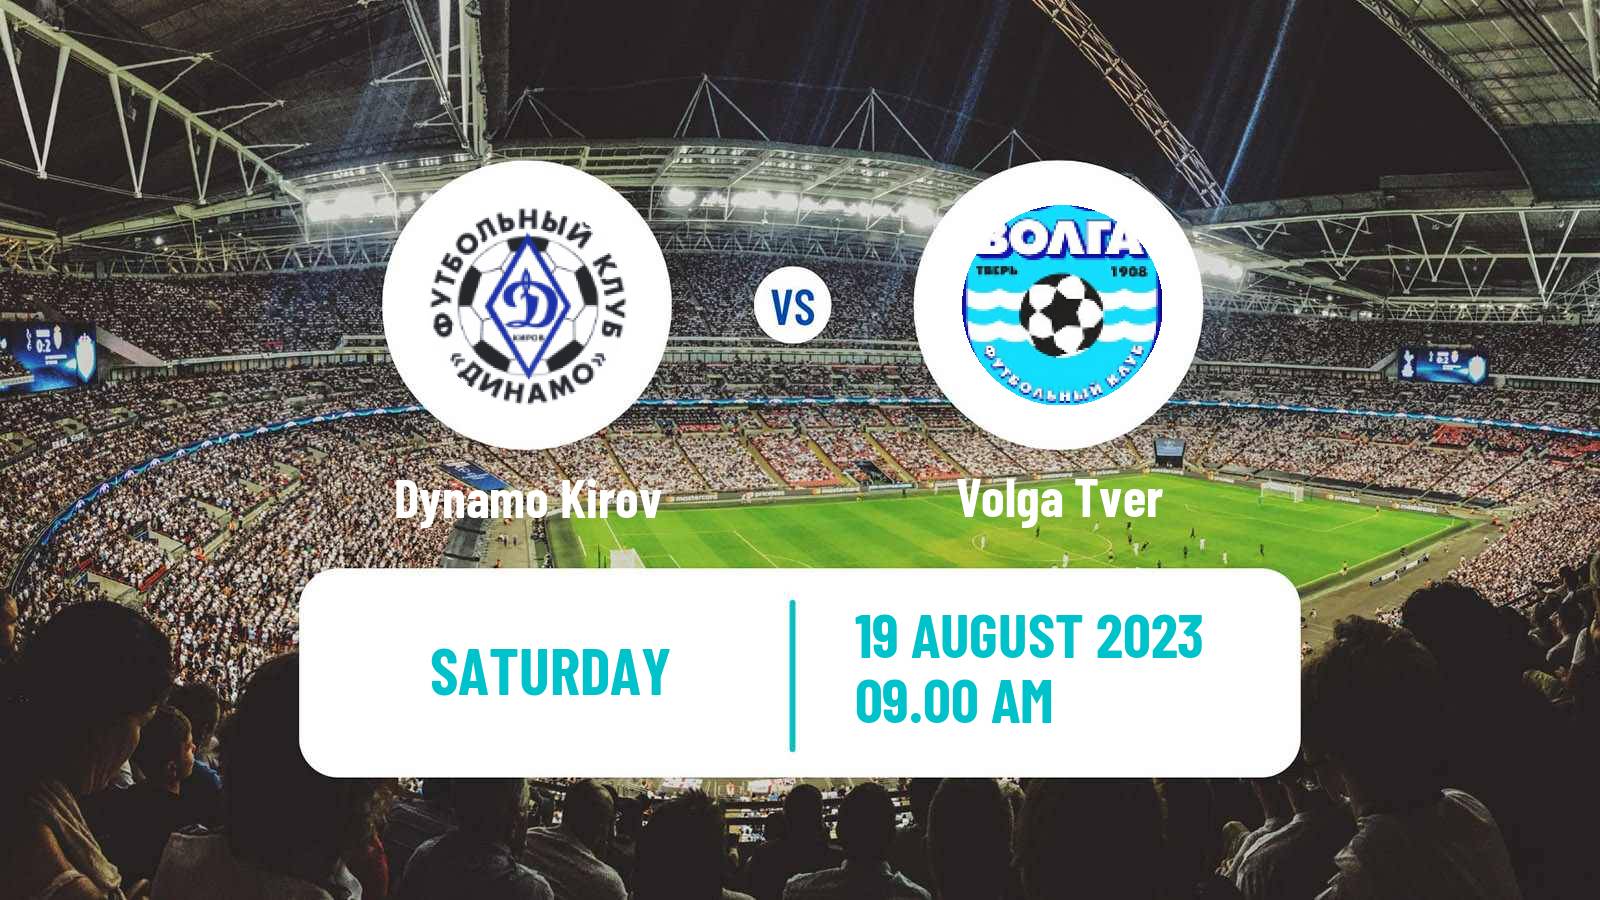 Soccer FNL 2 Division B Group 2 Dynamo Kirov - Volga Tver